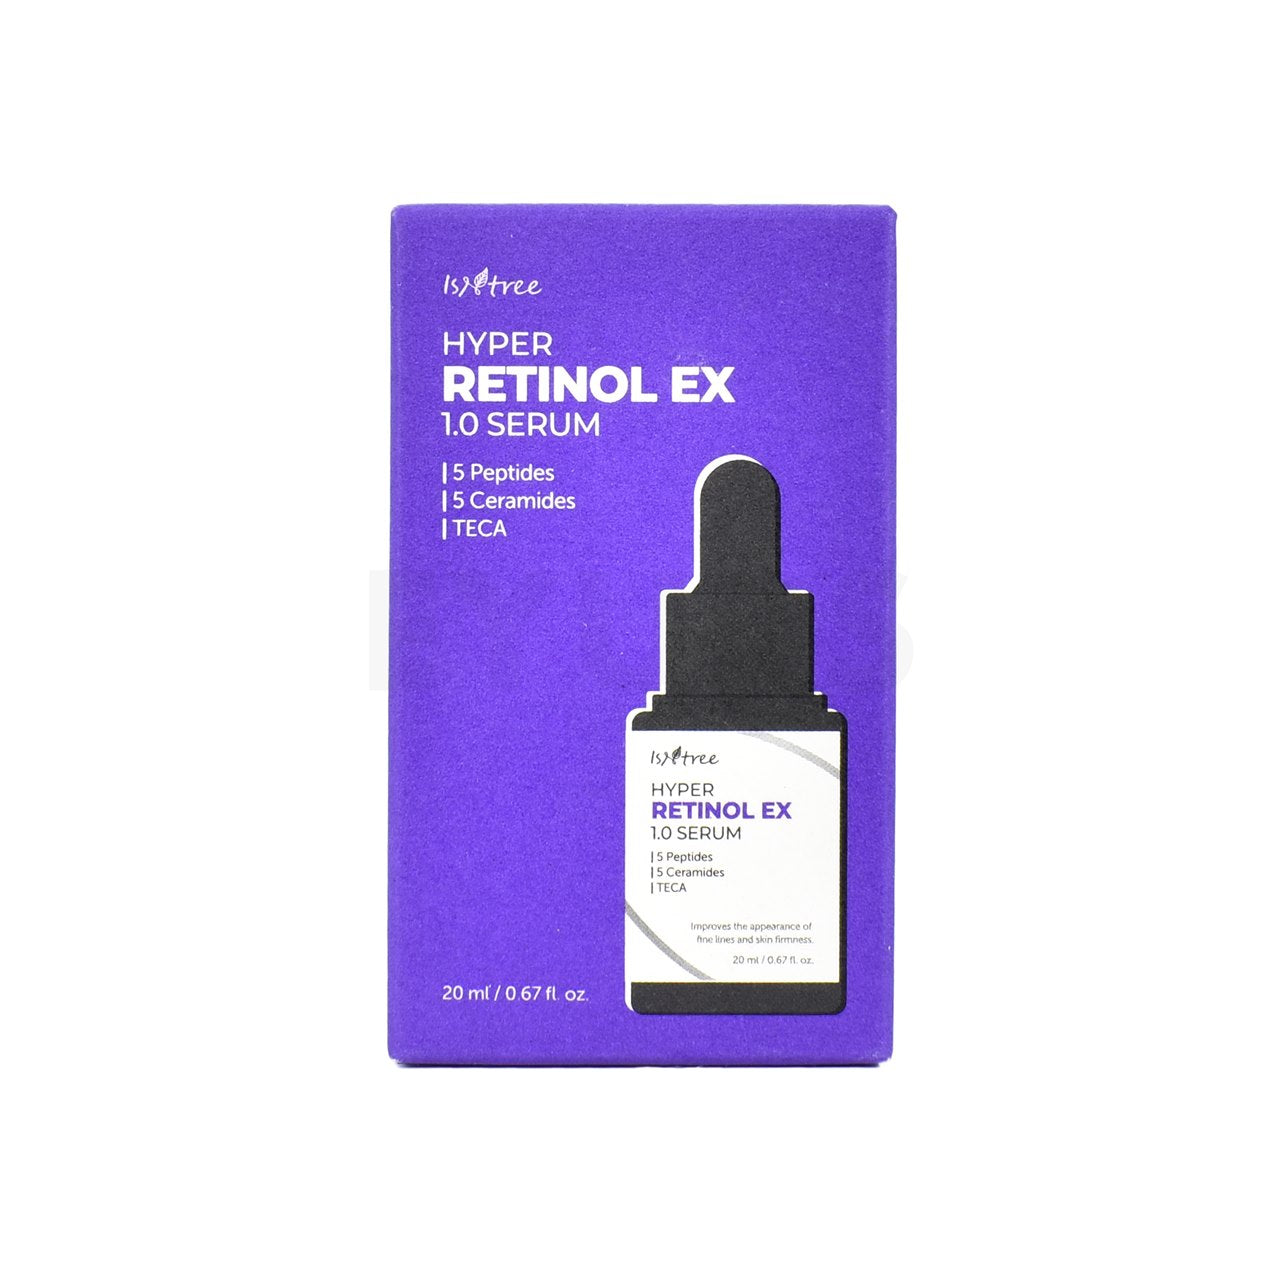 isntree hyper retinol ex 1 erum 20ml front side packaging